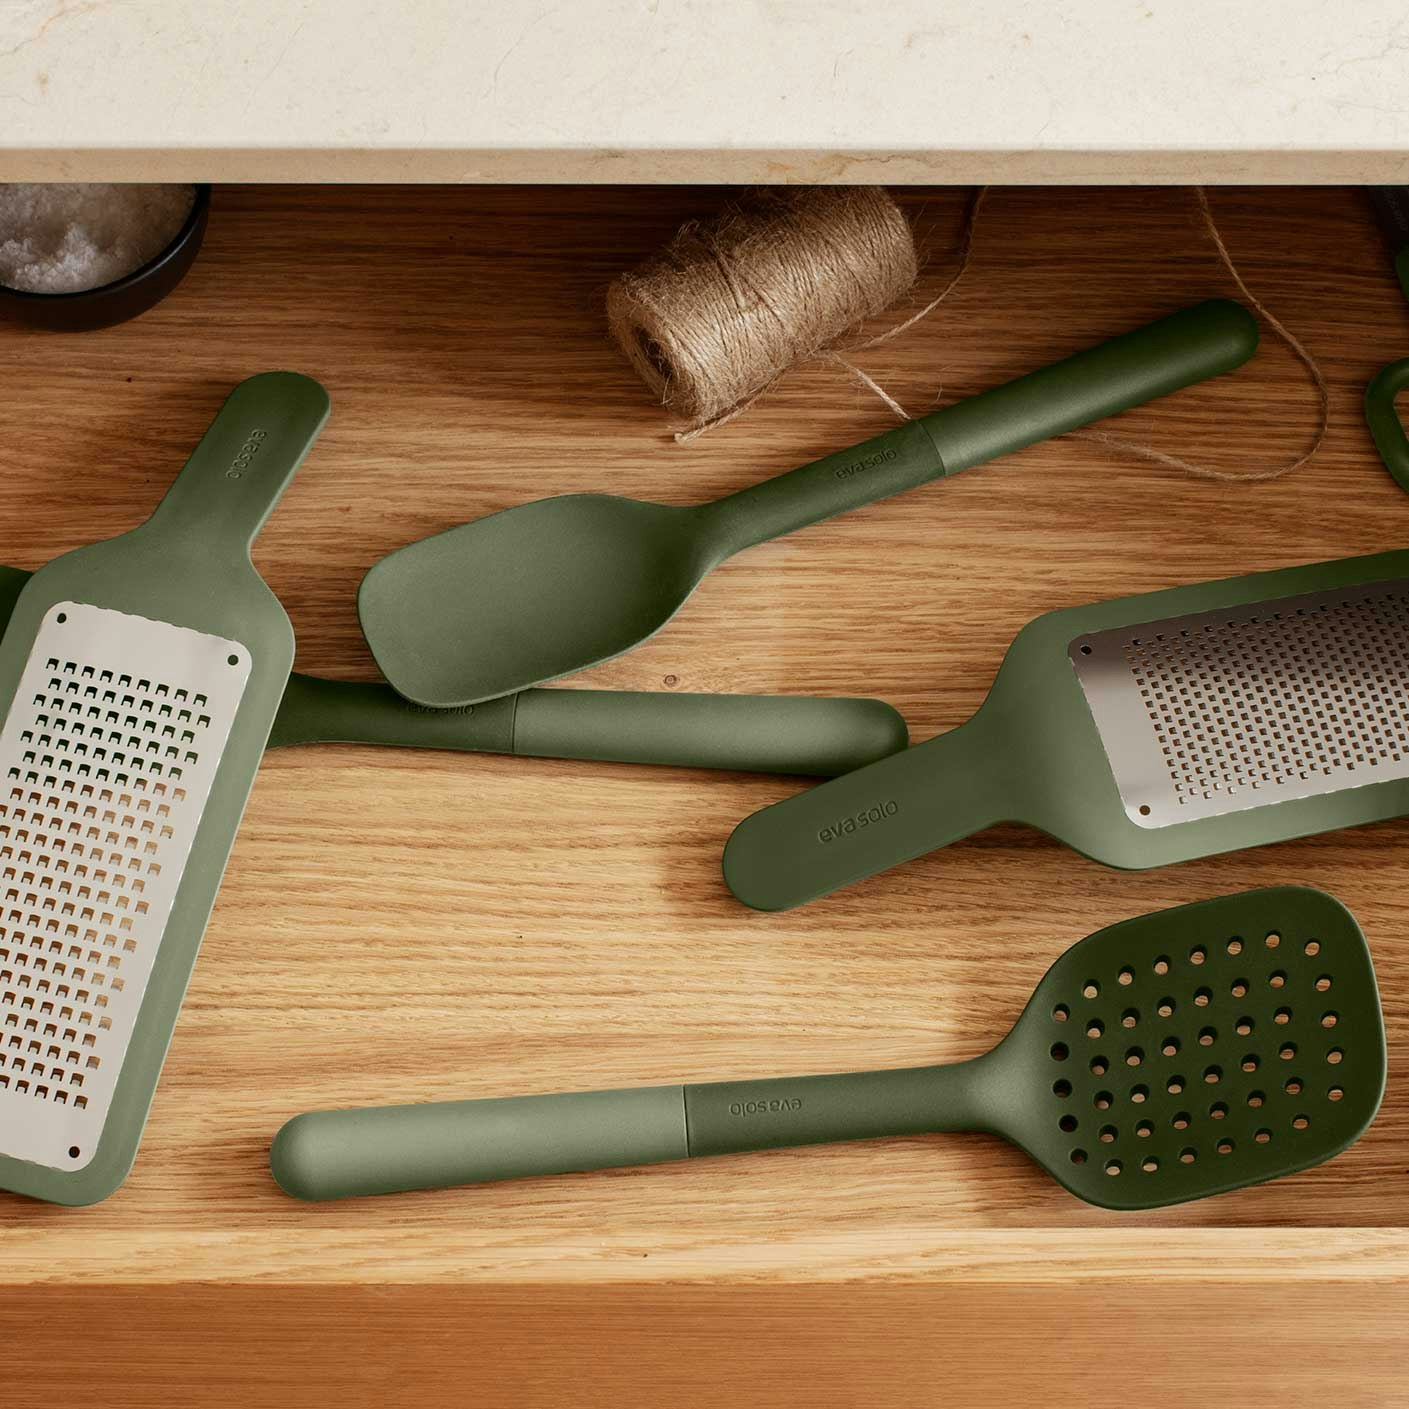 https://royaldesign.com/image/2/eva-solo-green-tools-slotted-spoon-0